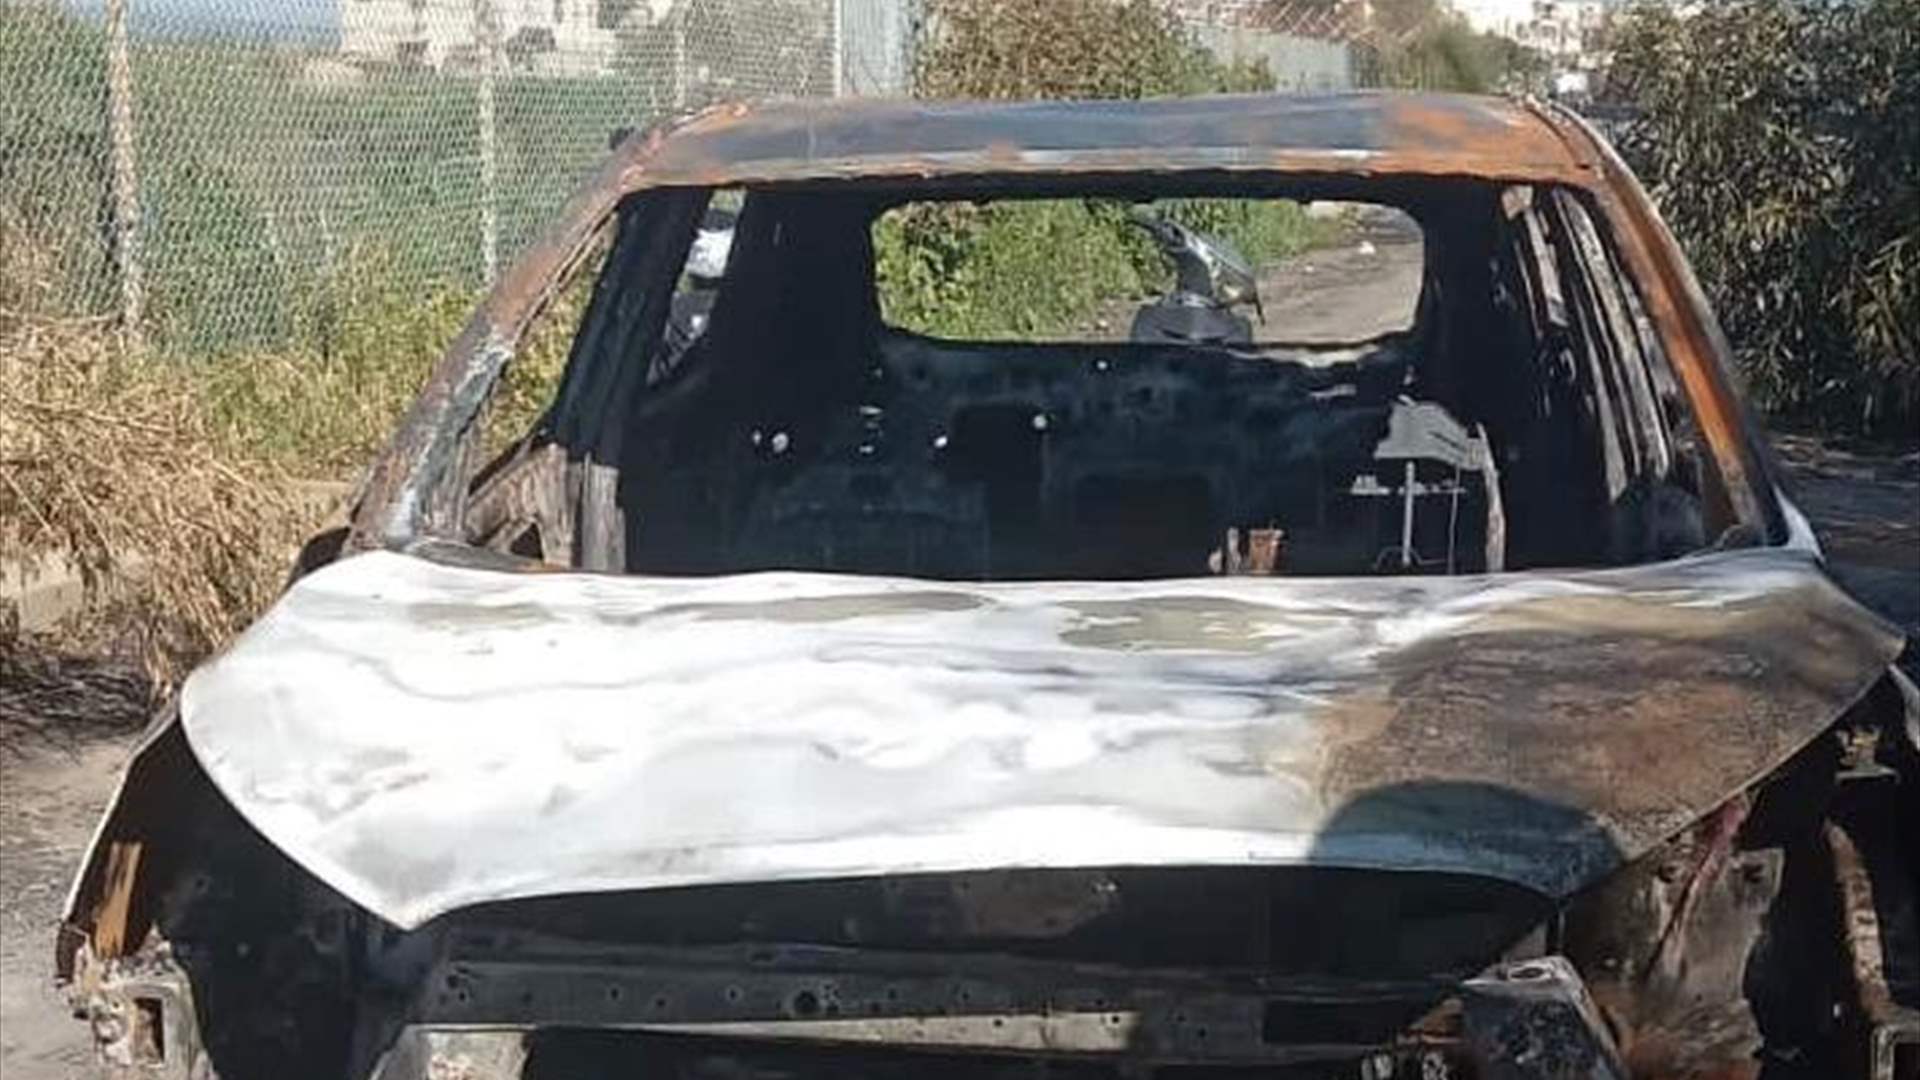 LBCI car stolen, found entirely burnt out